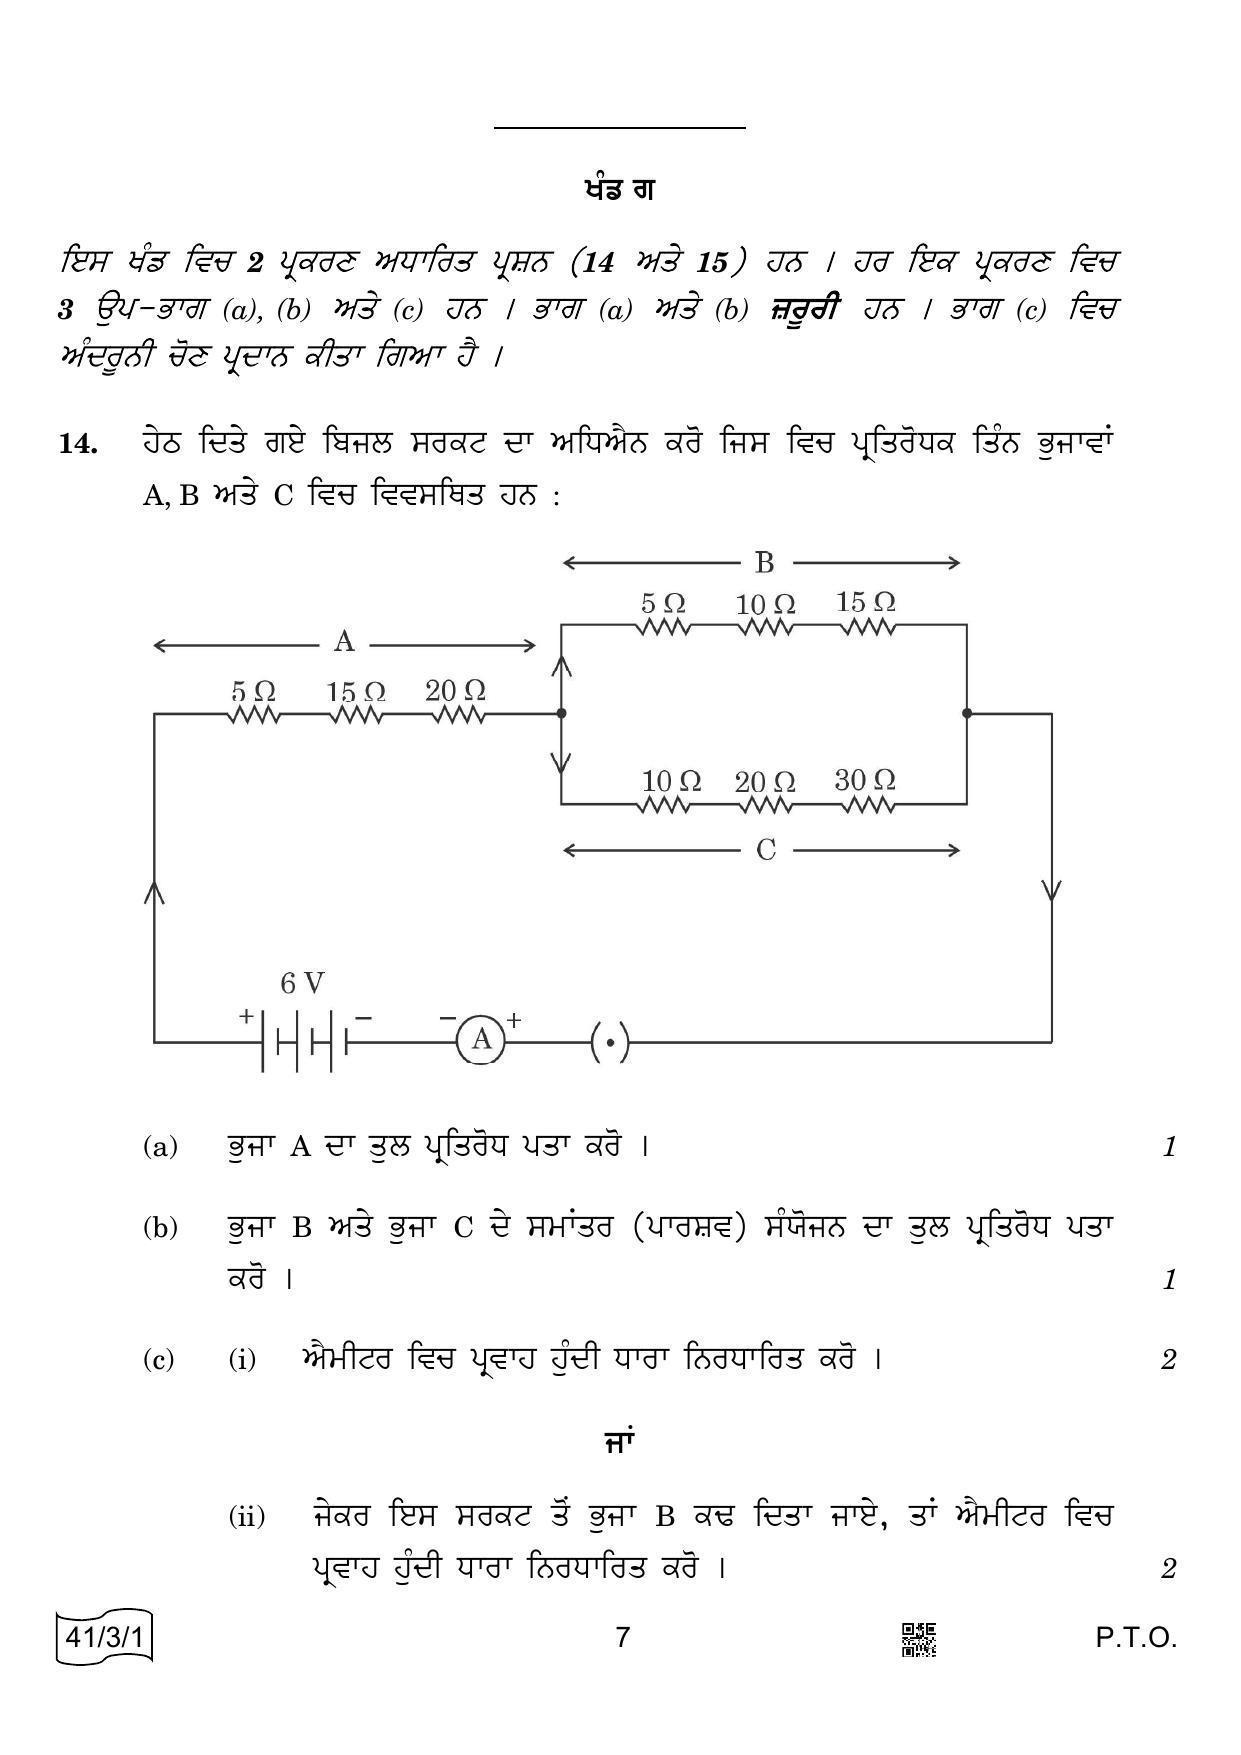 CBSE Class 10 41-3-1 Science Punjabi Version 2022 Question Paper - Page 7